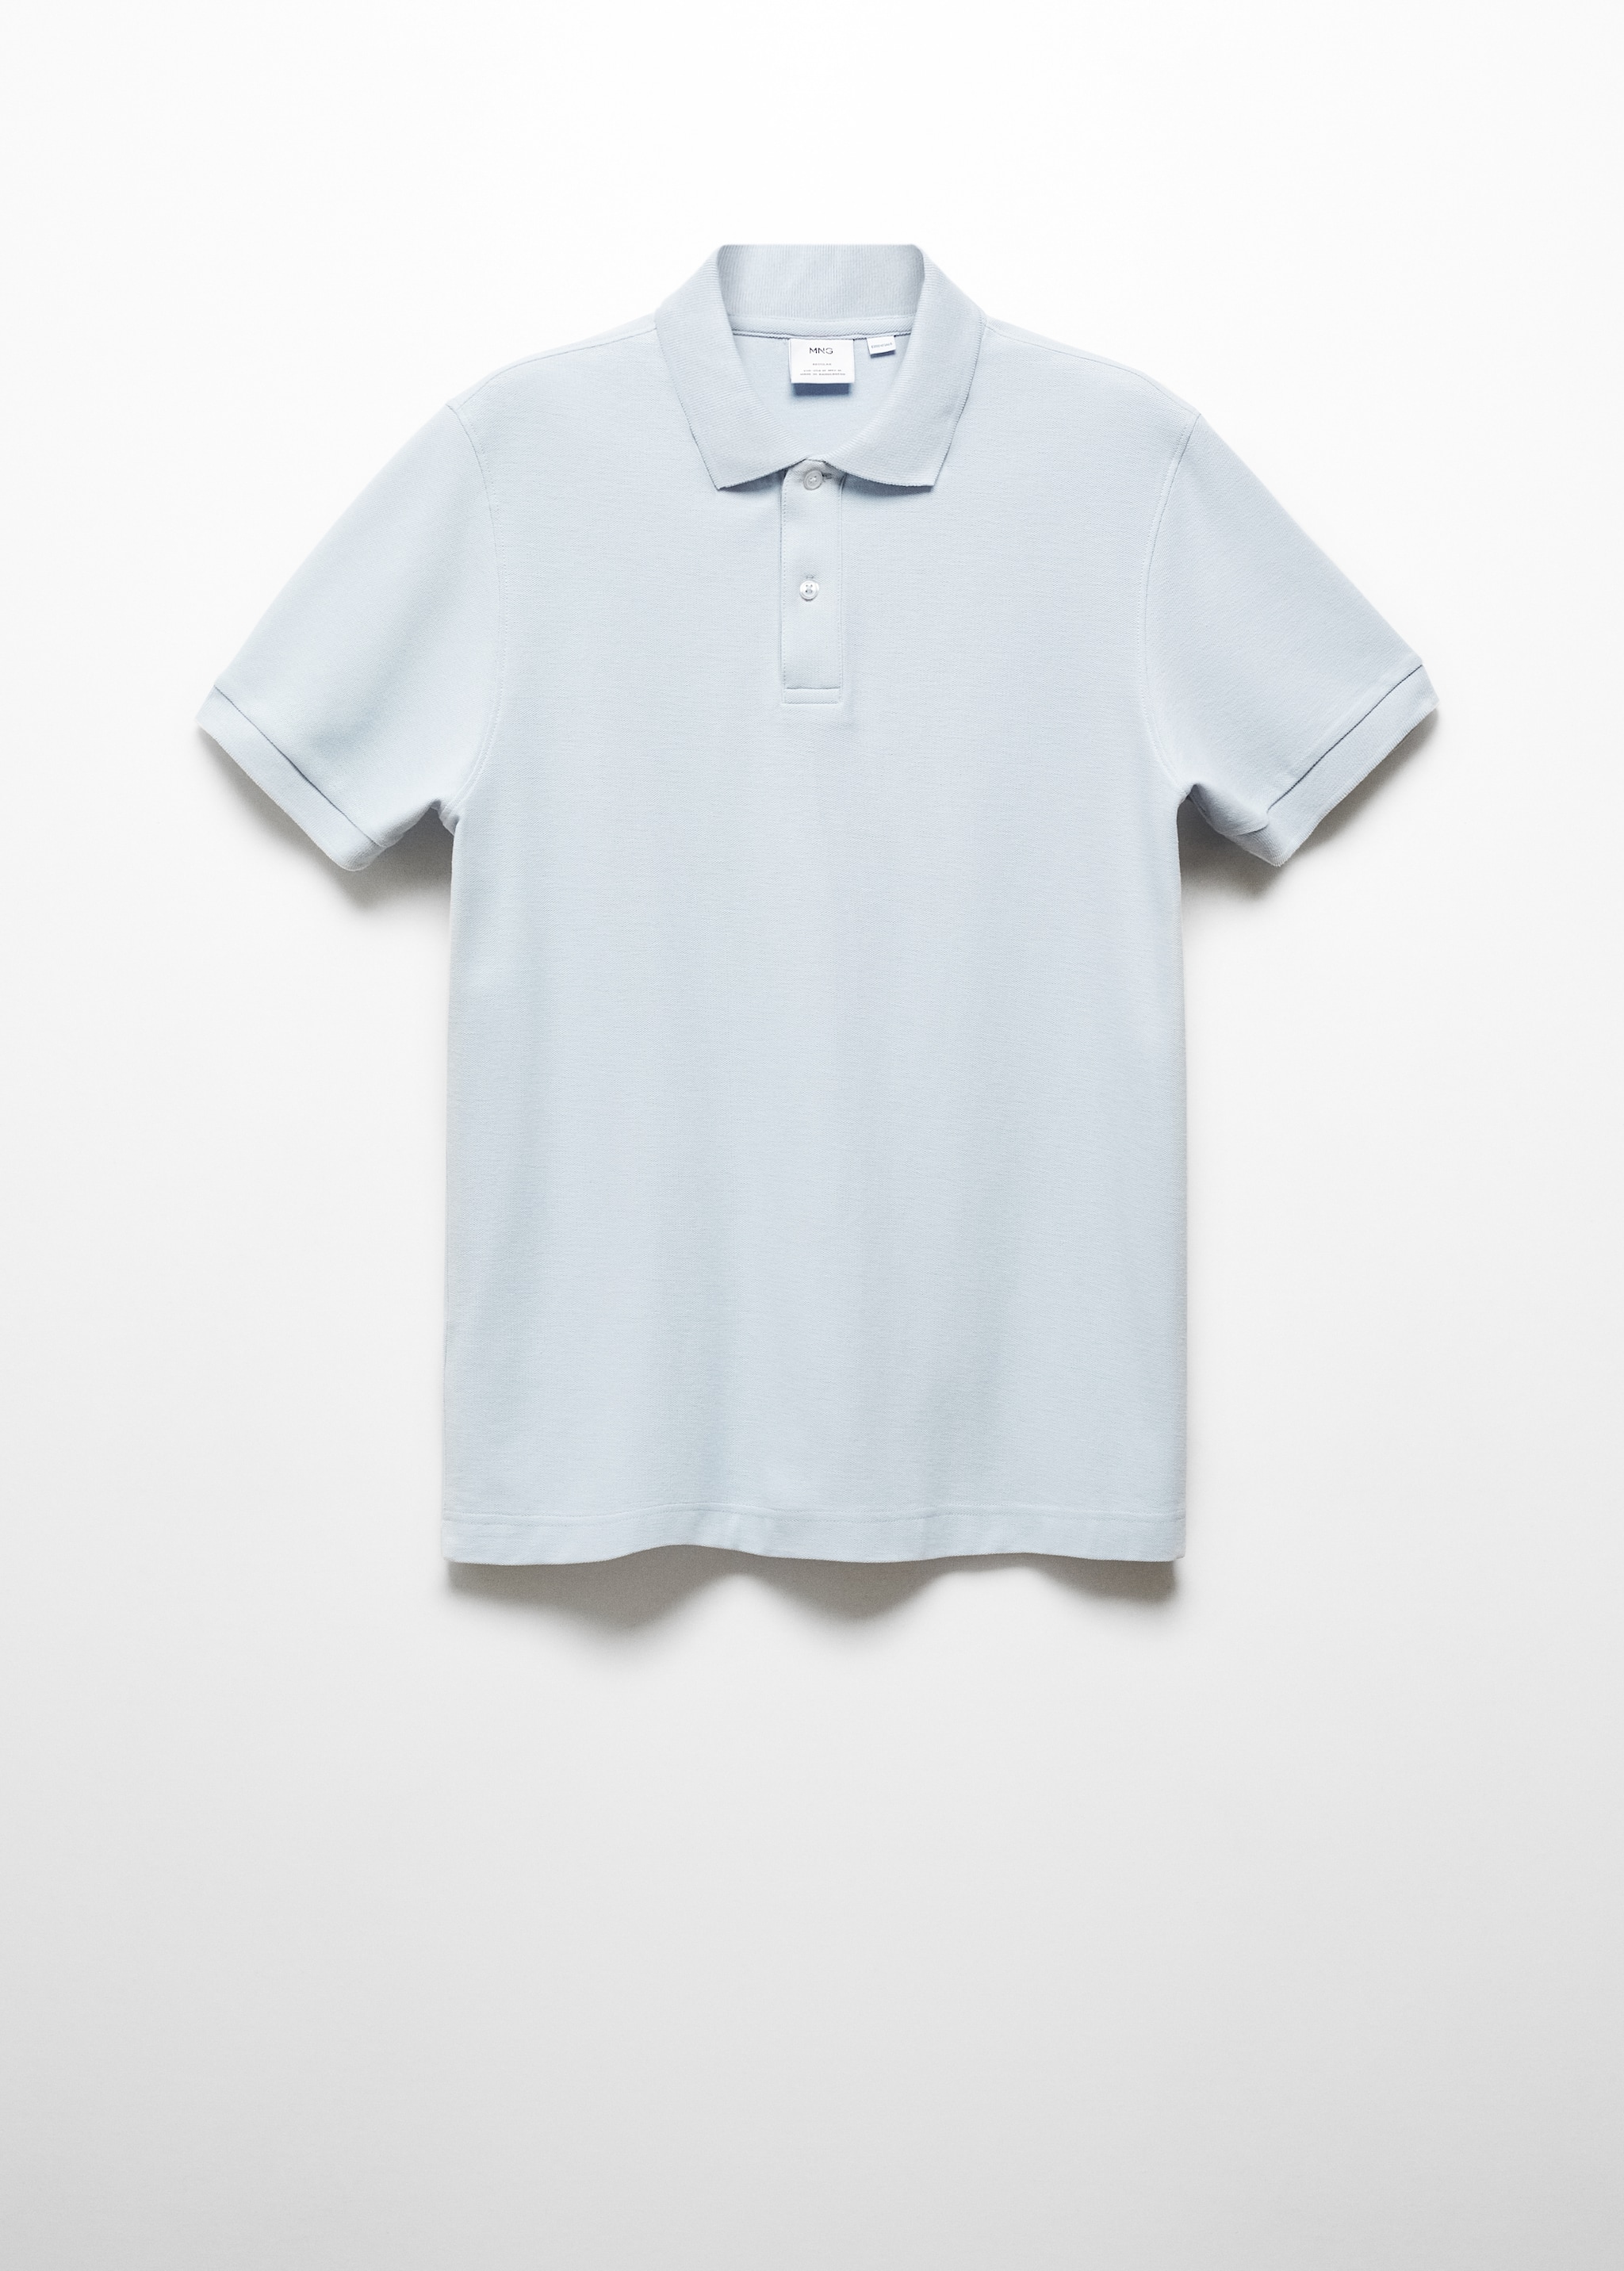 100% cotton pique polo shirt - Article without model